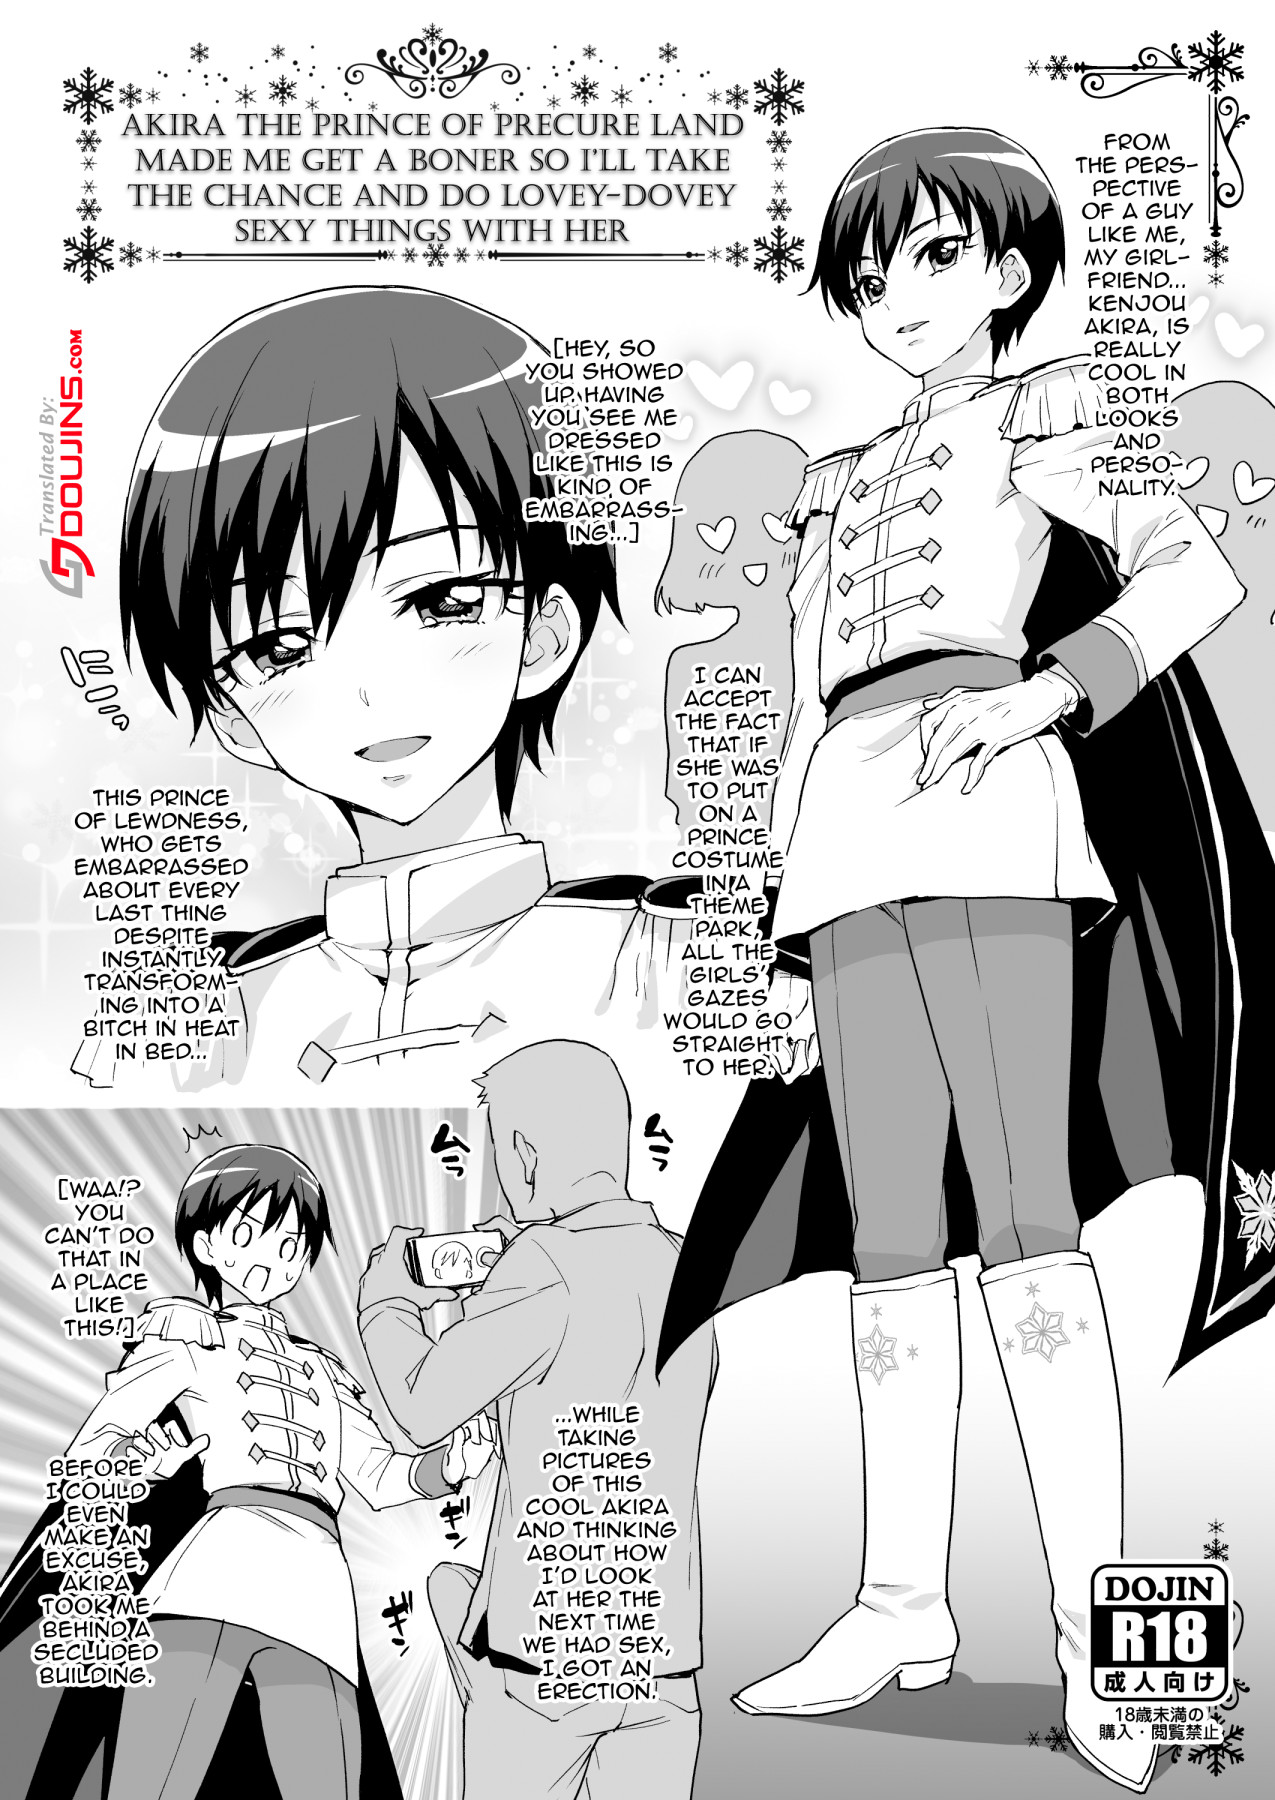 Hentai Manga Comic-Precure Limited Edition 8 Page Book-Read-1